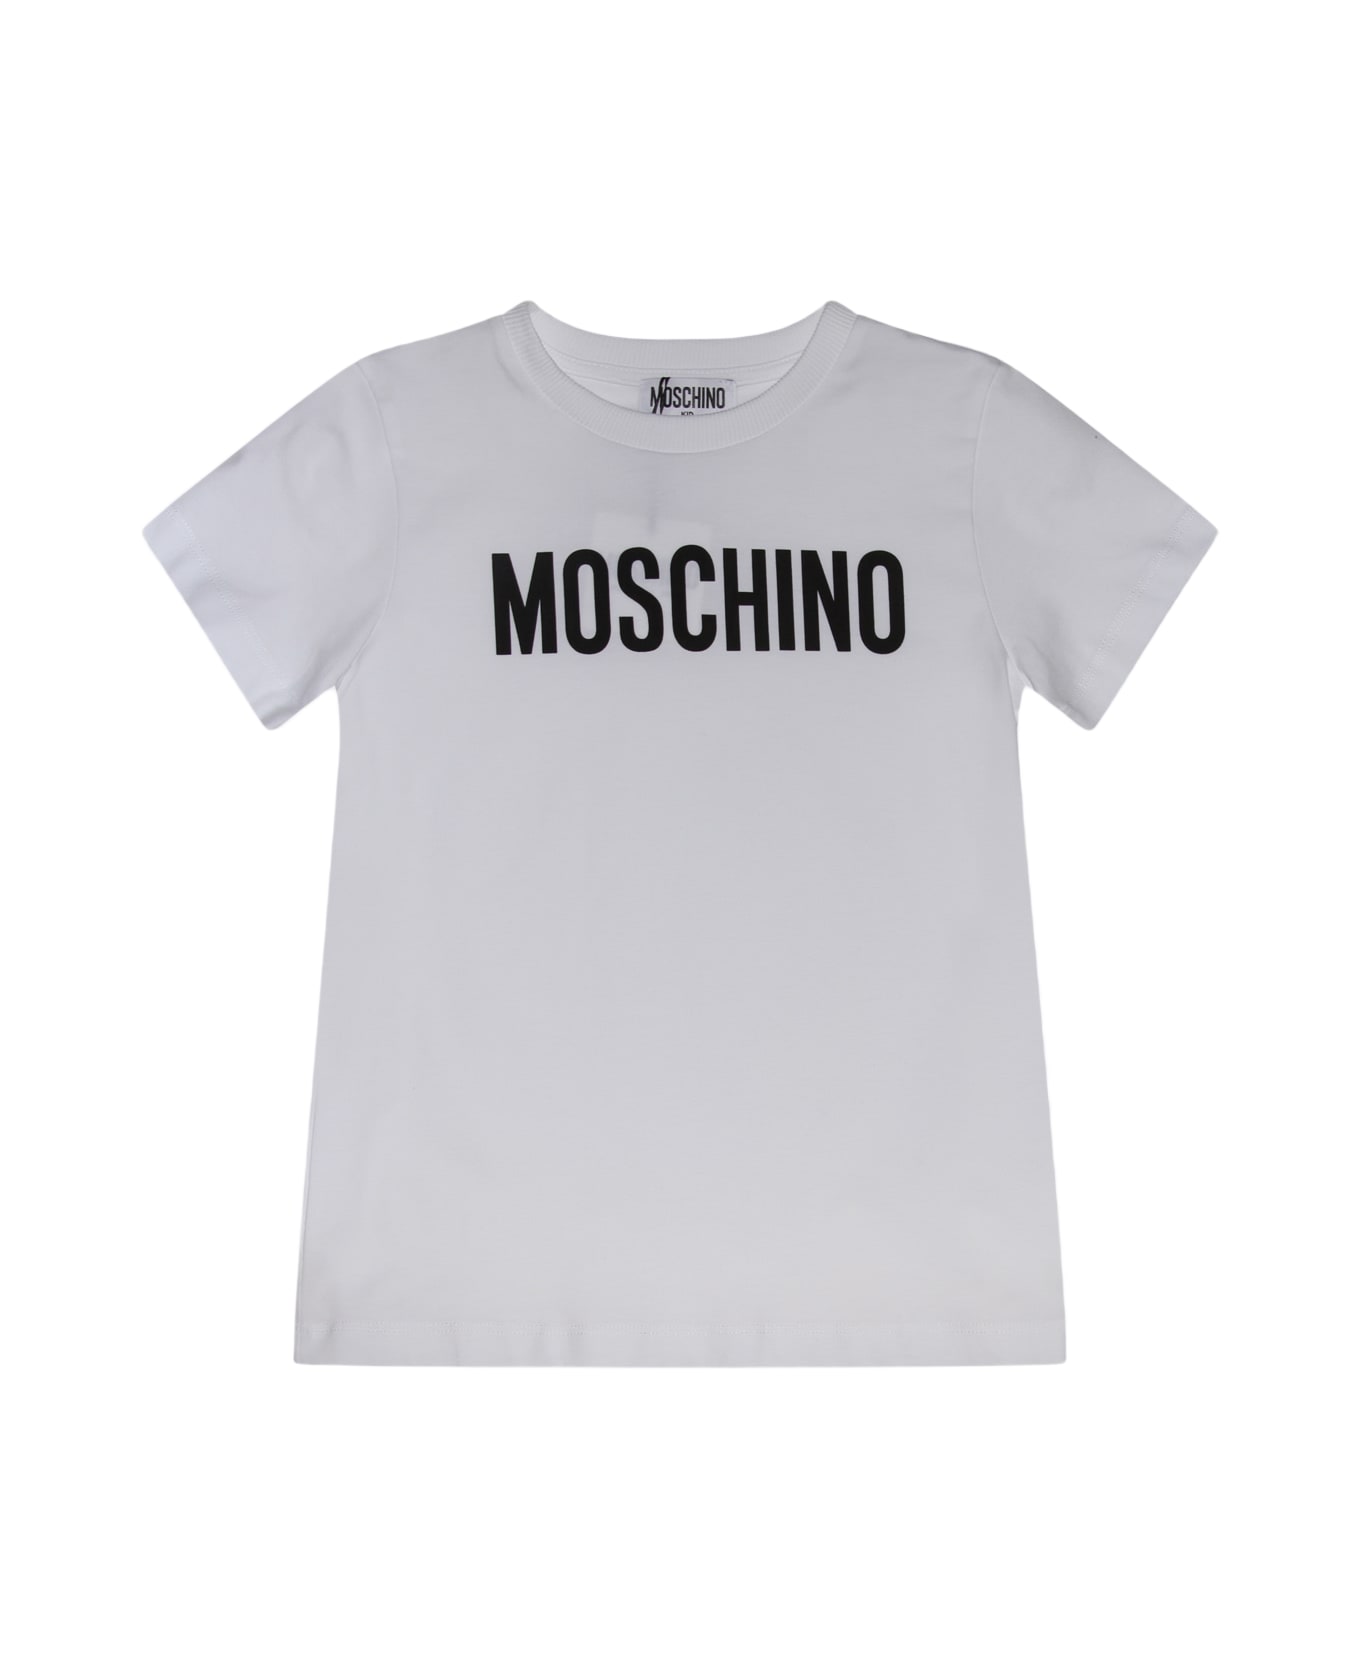 Moschino White And Black Cotton T-shirt - Bianco